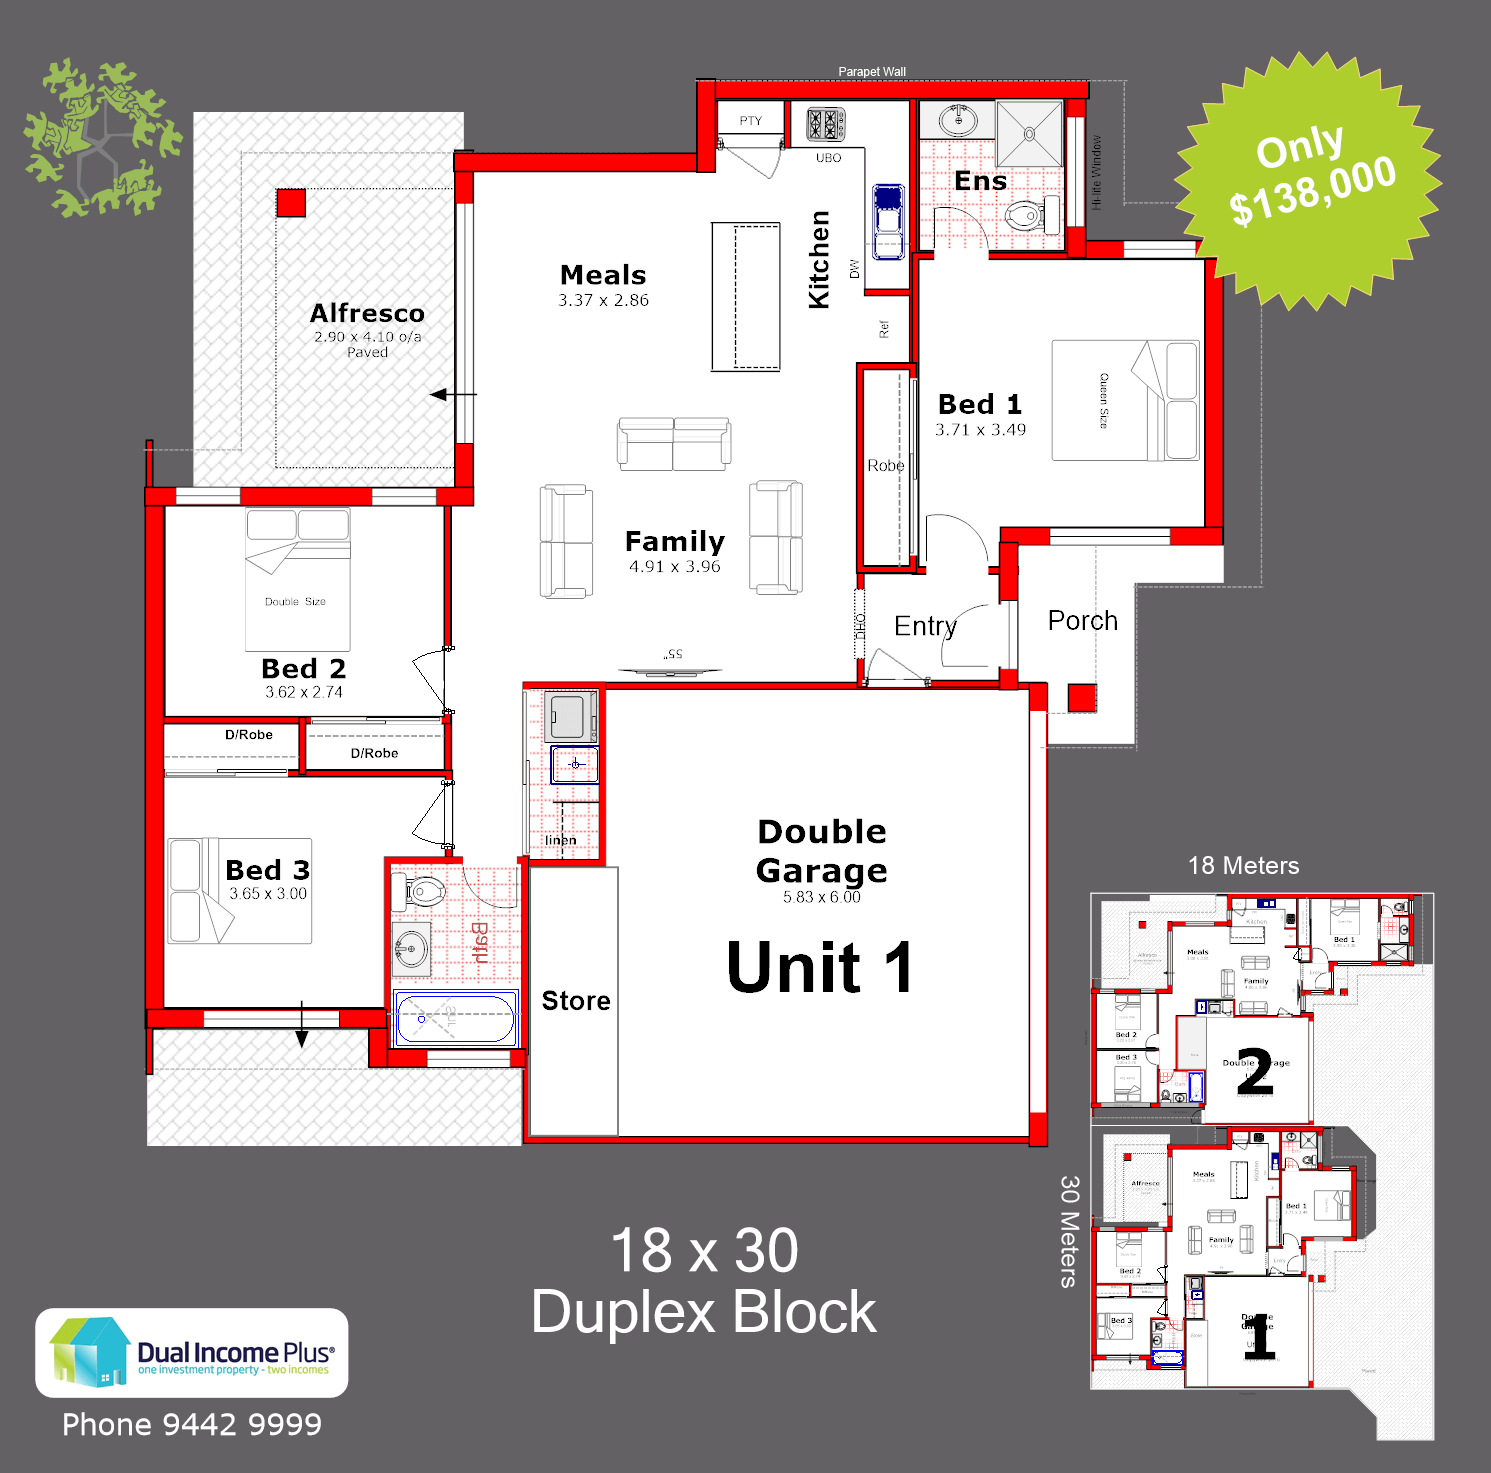 18 x 30 Duplex Design - Lot 1